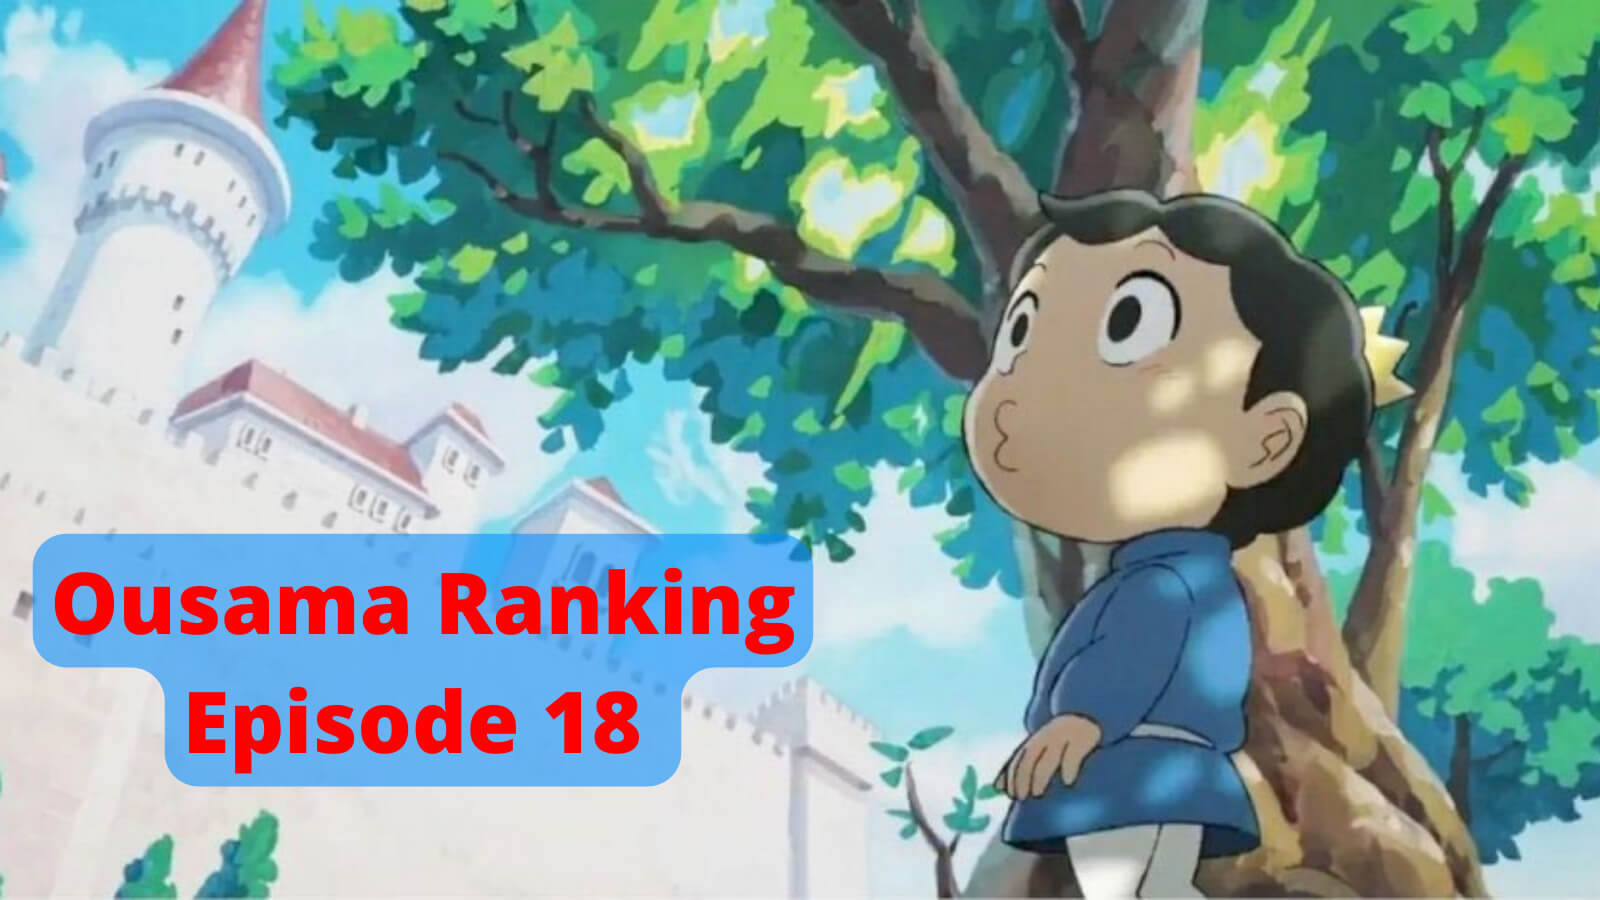 Ousama Ranking Episode 18 Release Date: Saturn's Lineage - OtakuKart